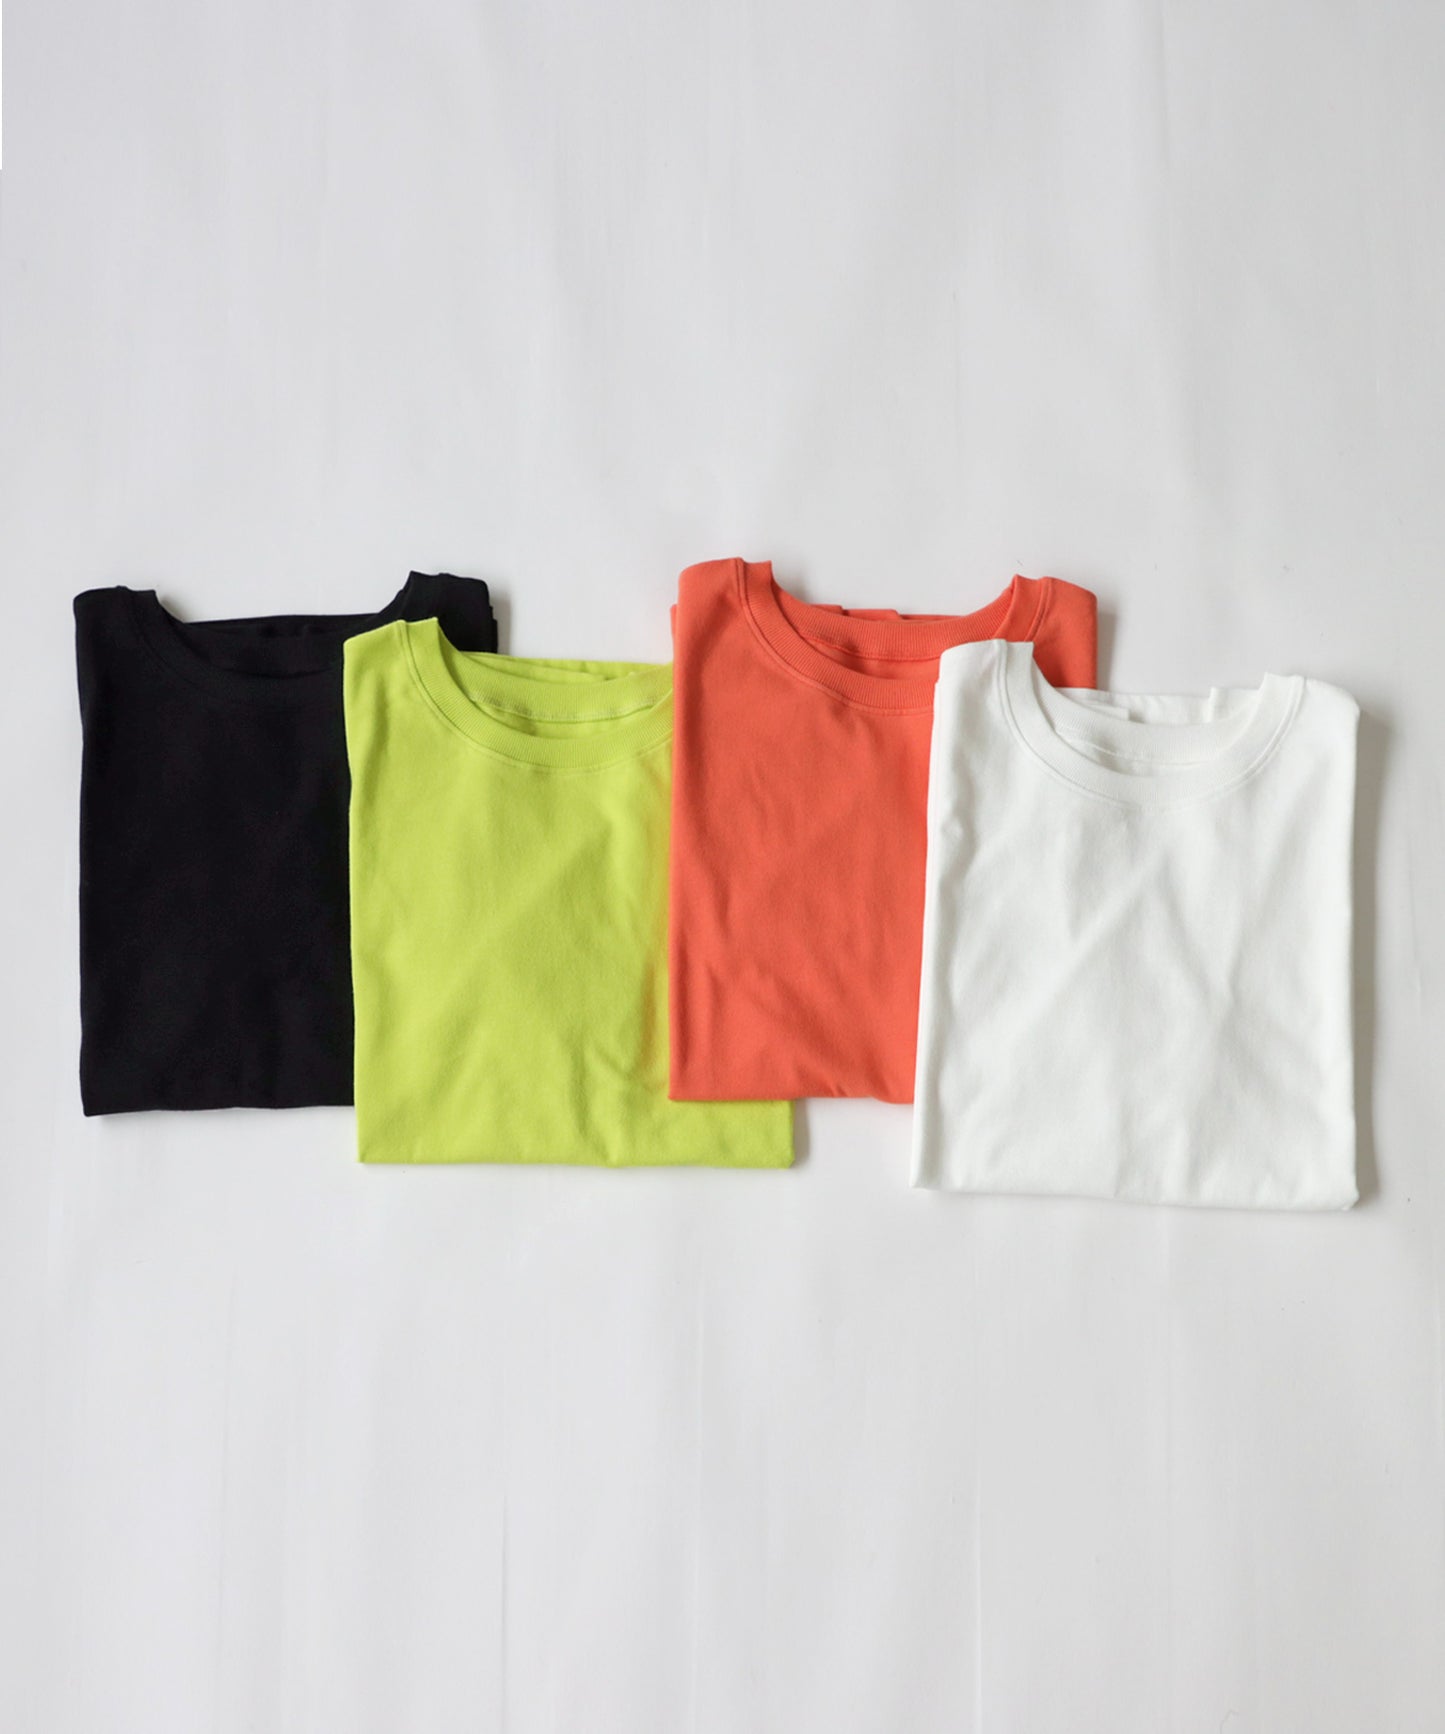 Solid T -shirt T -shirt Ladies Tops Short Sleeve Cotton 100